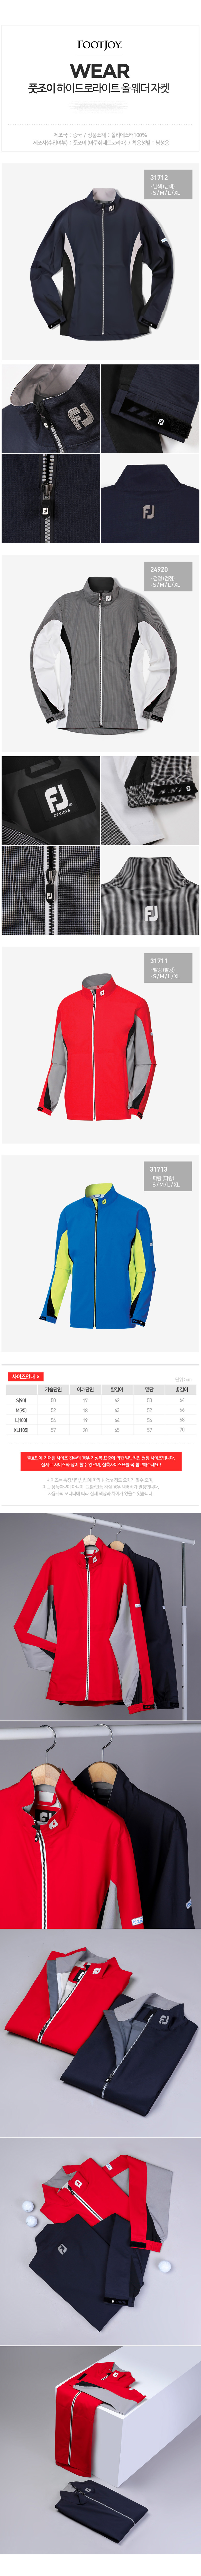 footjoy_2015_hydrolite_all_weather_jacket.jpg